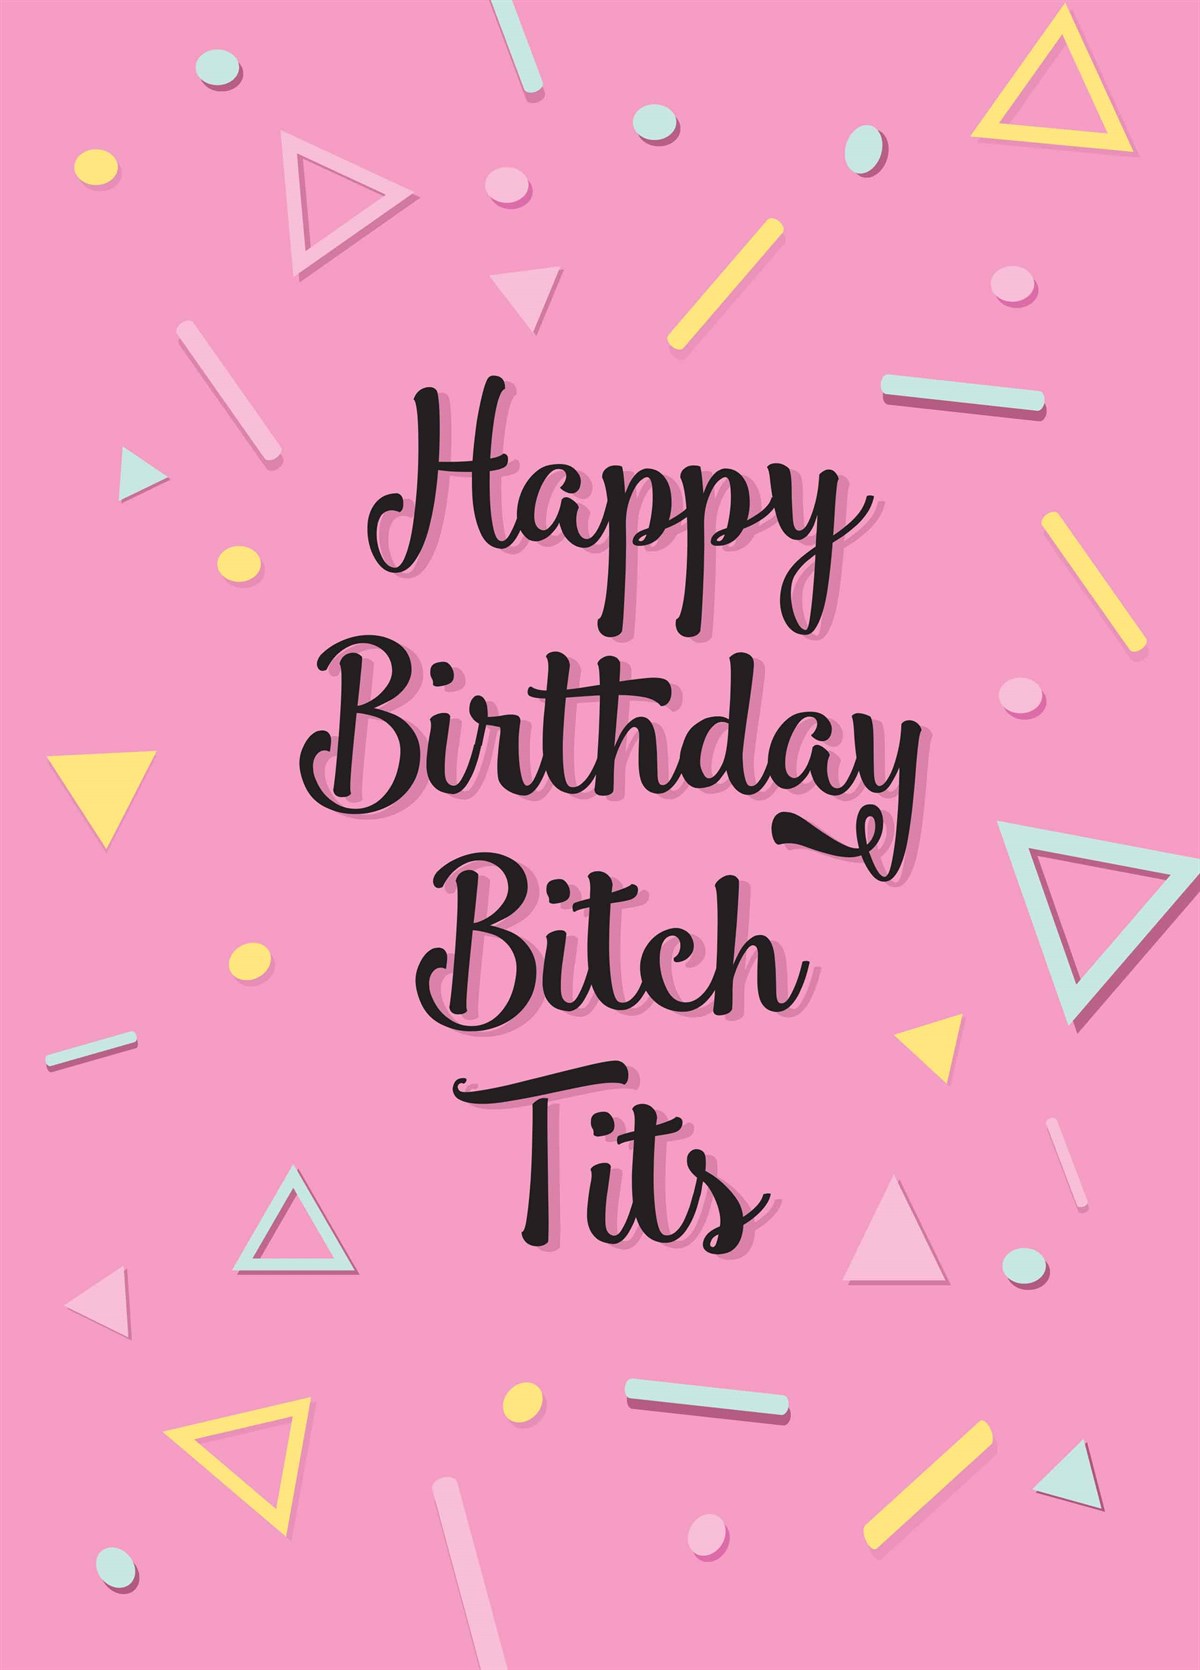 Tits birthday Party